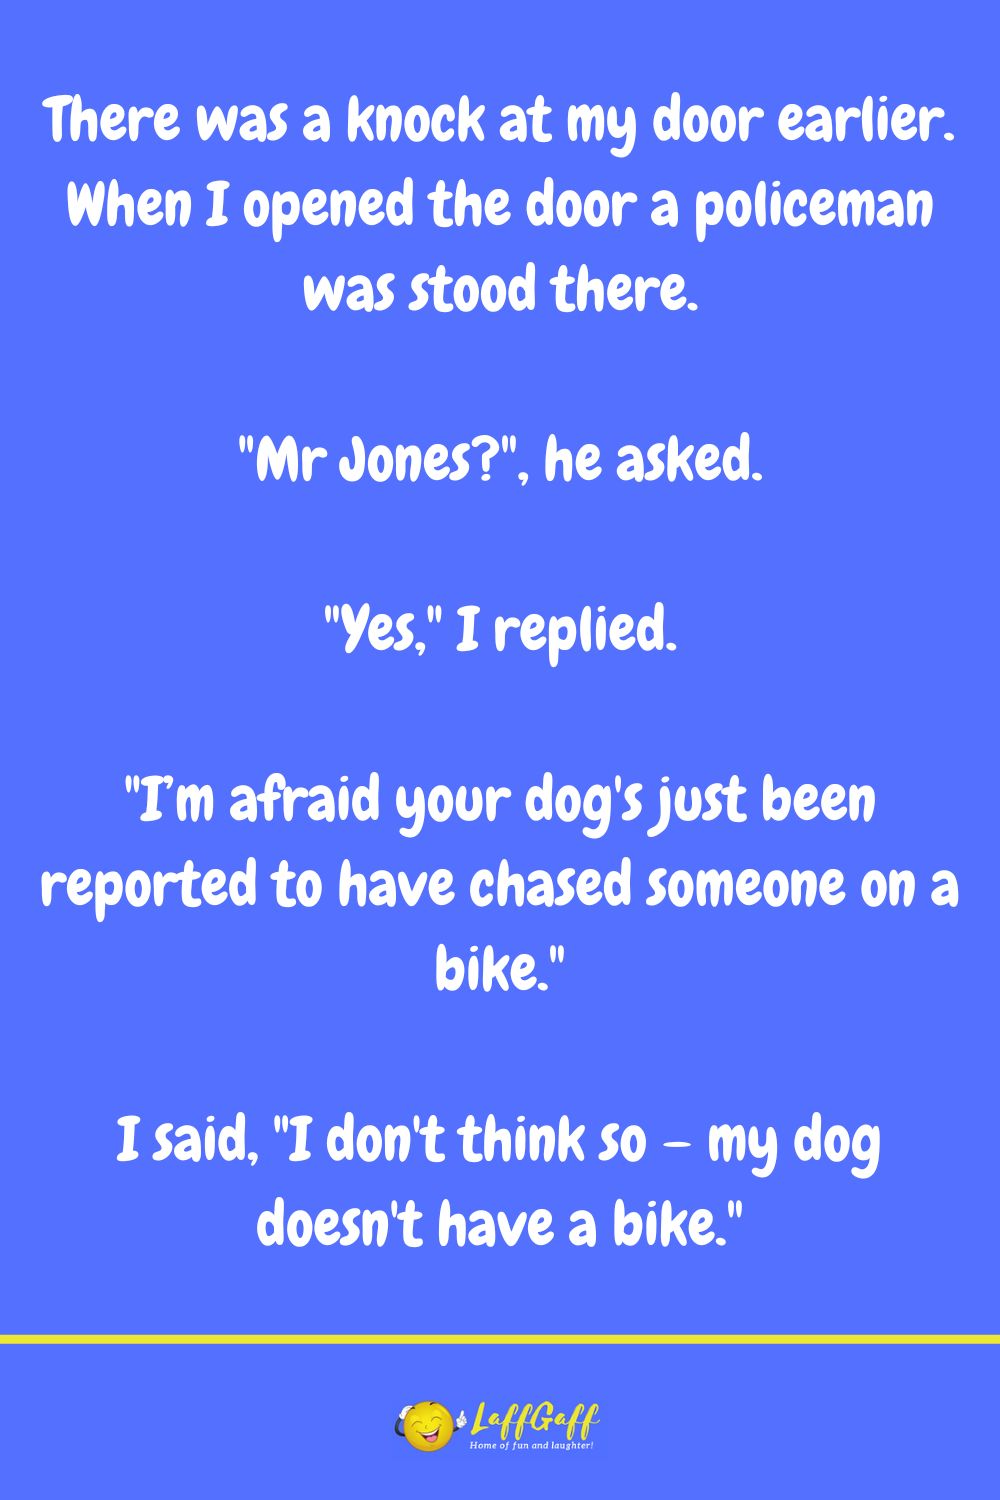 Dog on bike joke from LaffGaff.